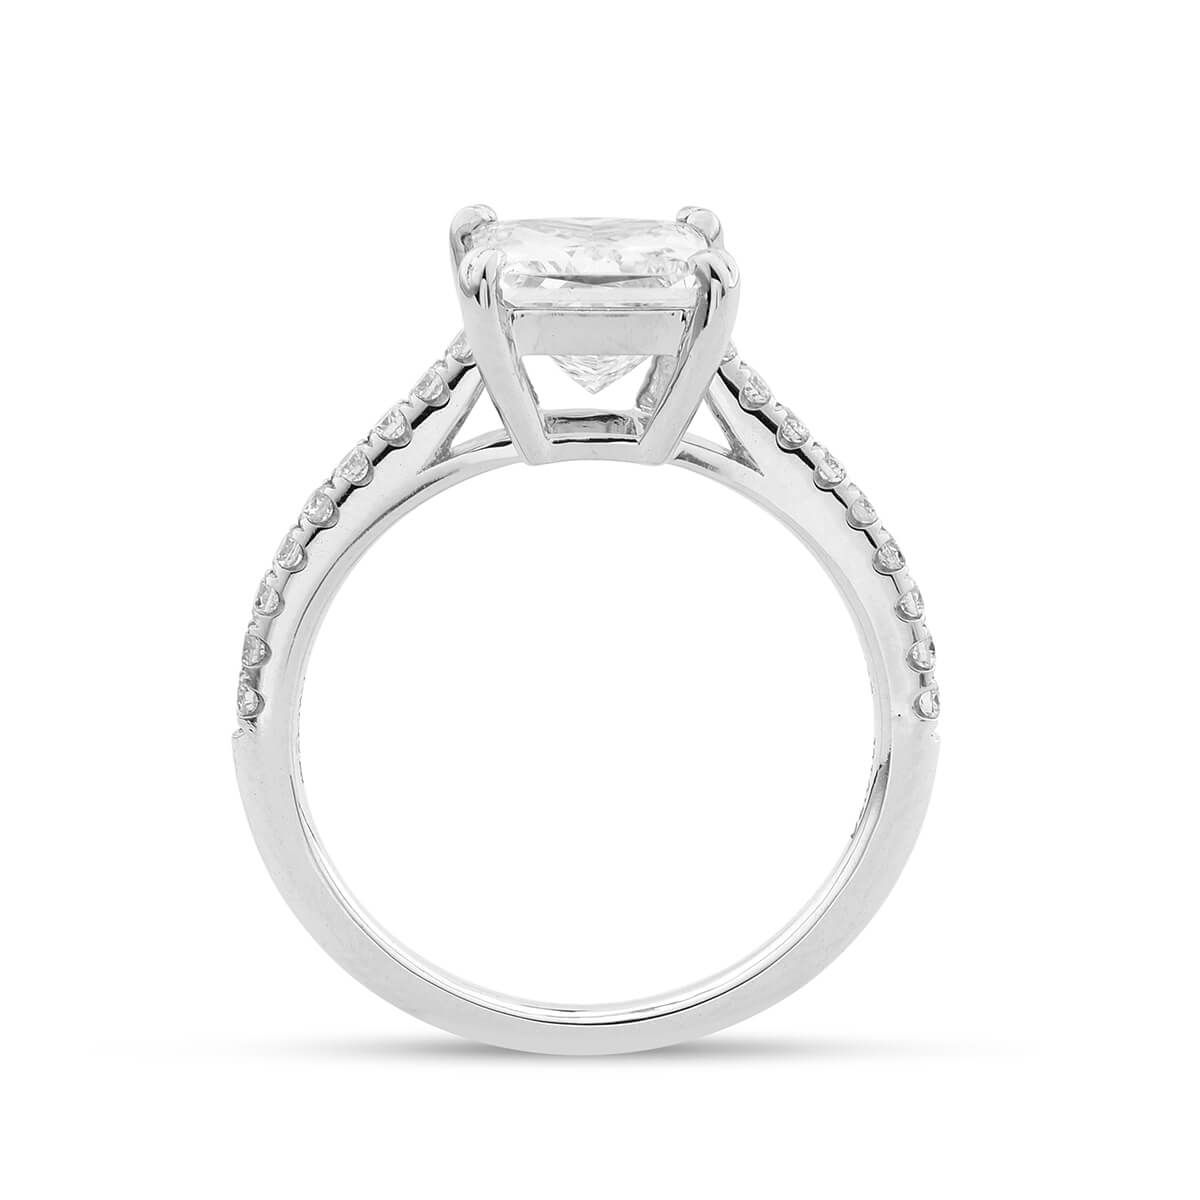  White Diamond Ring, 2.01 Ct. (2.23 Ct. TW), Princess shape, GIA Certified, 3175104031